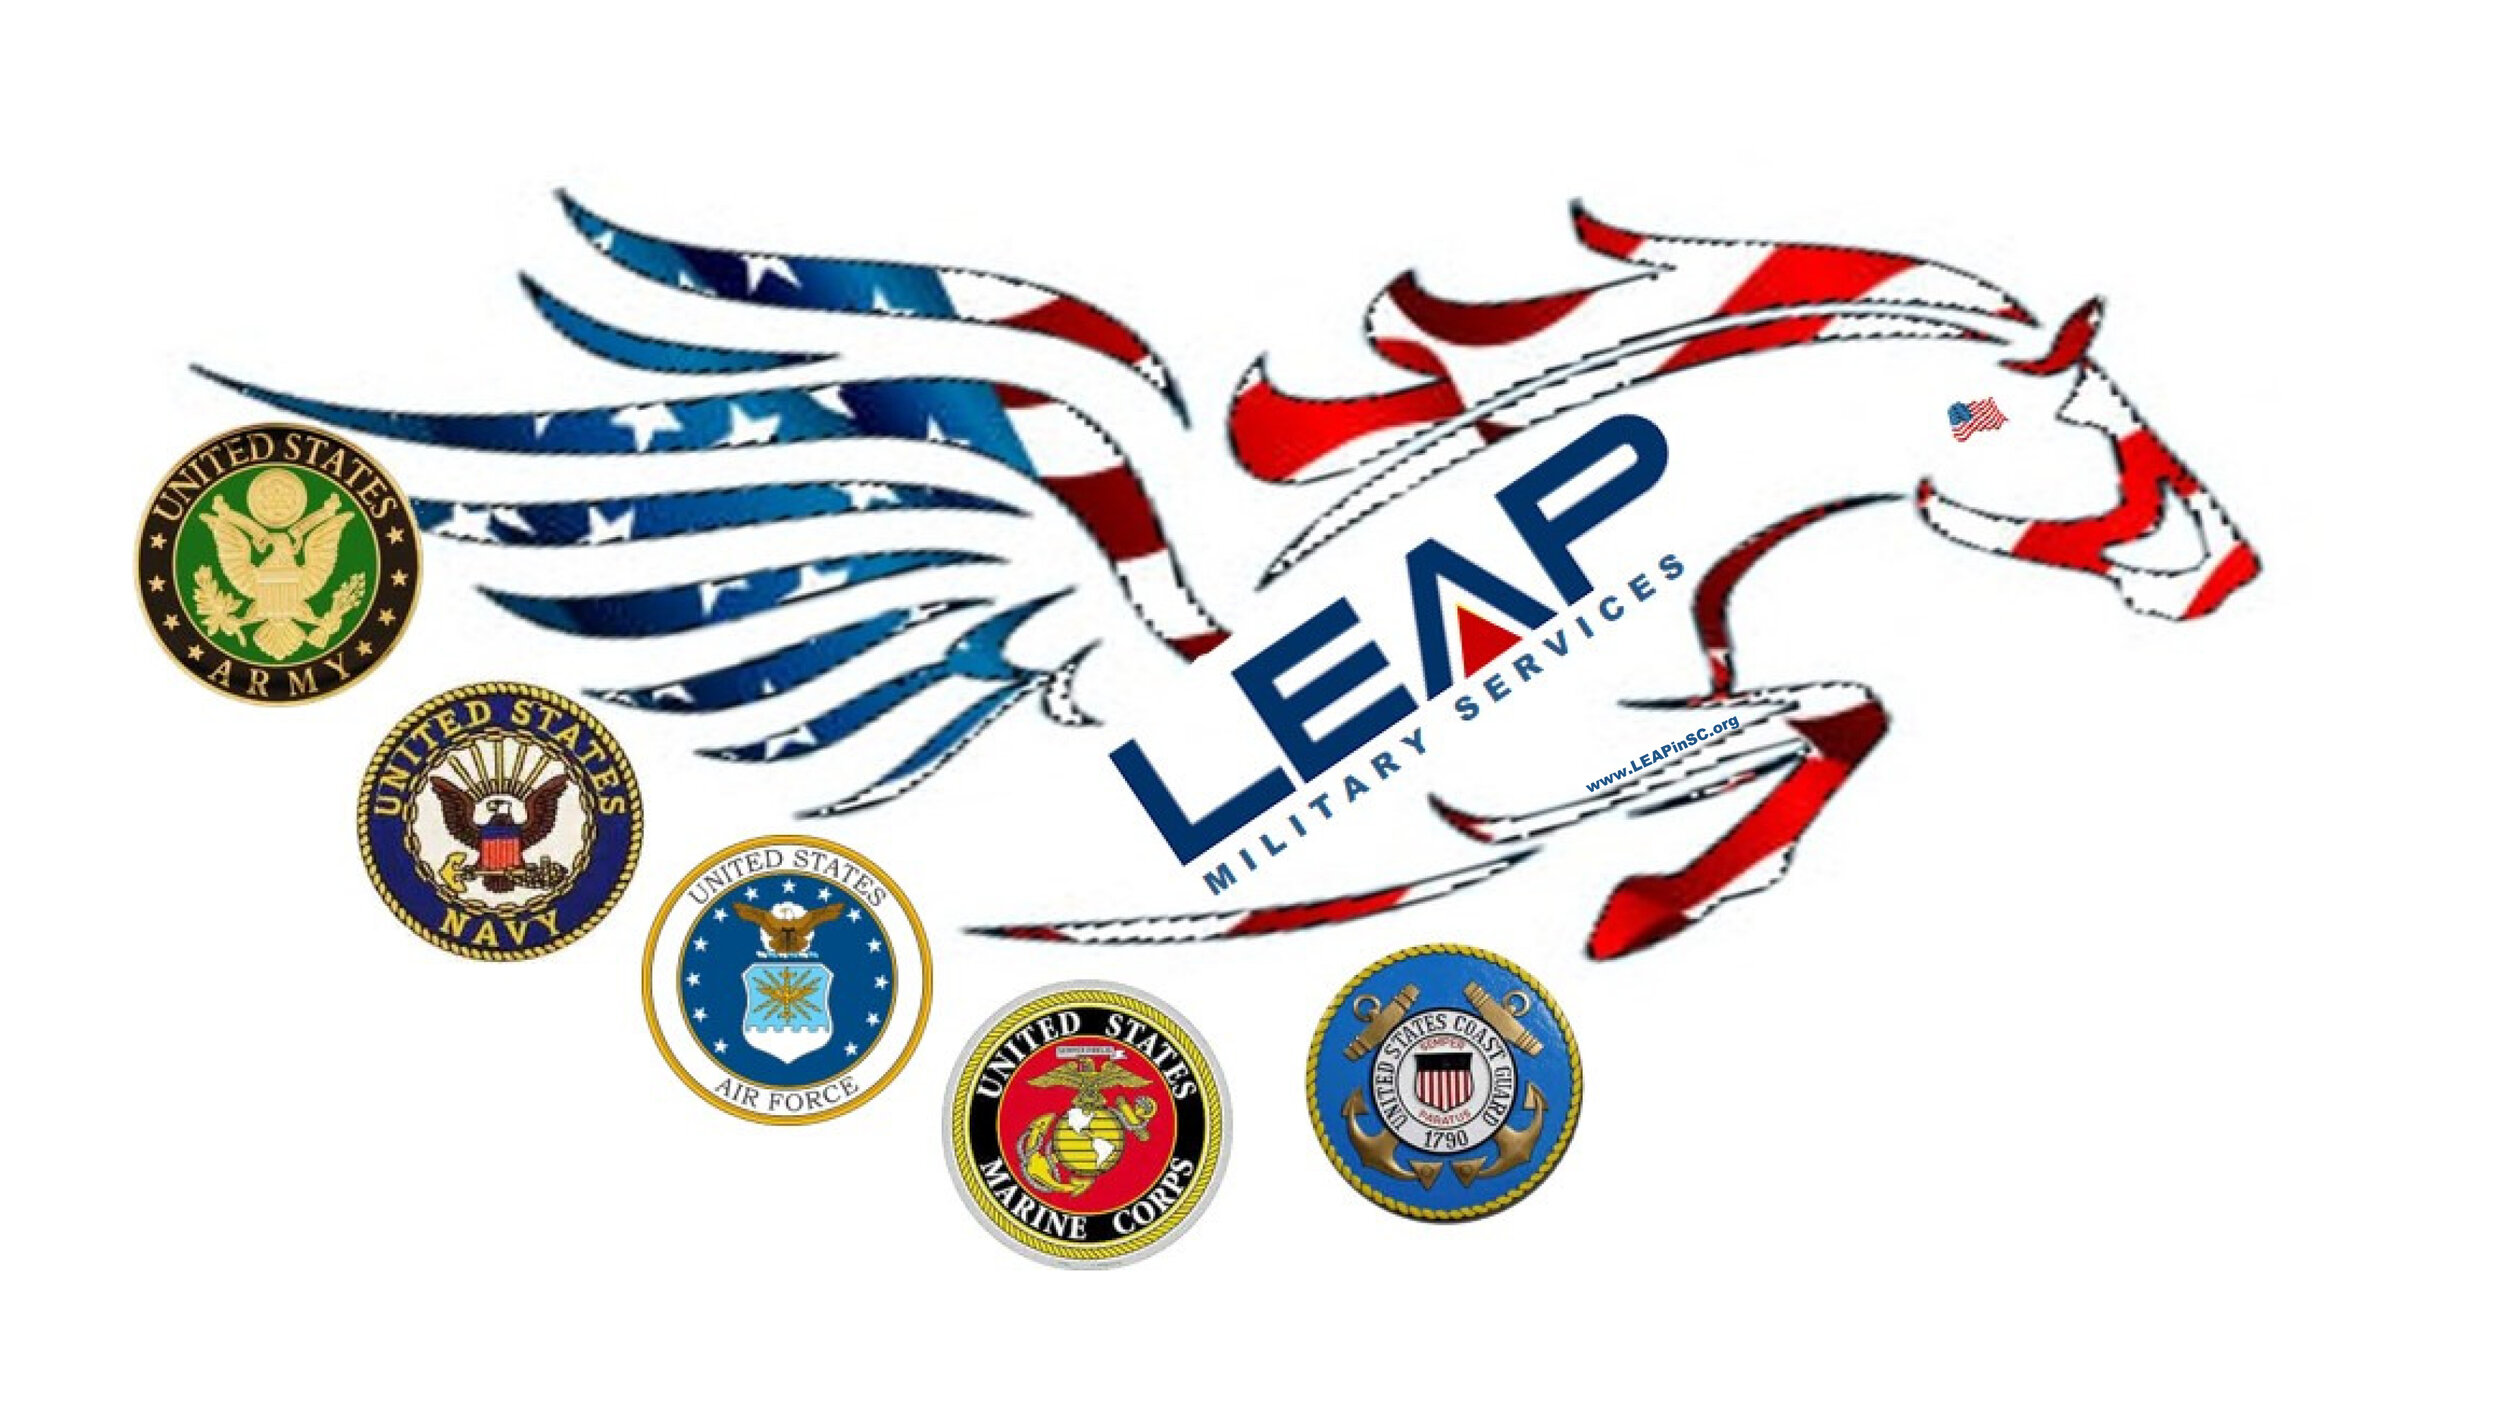 LEAP military logo 1.jpg